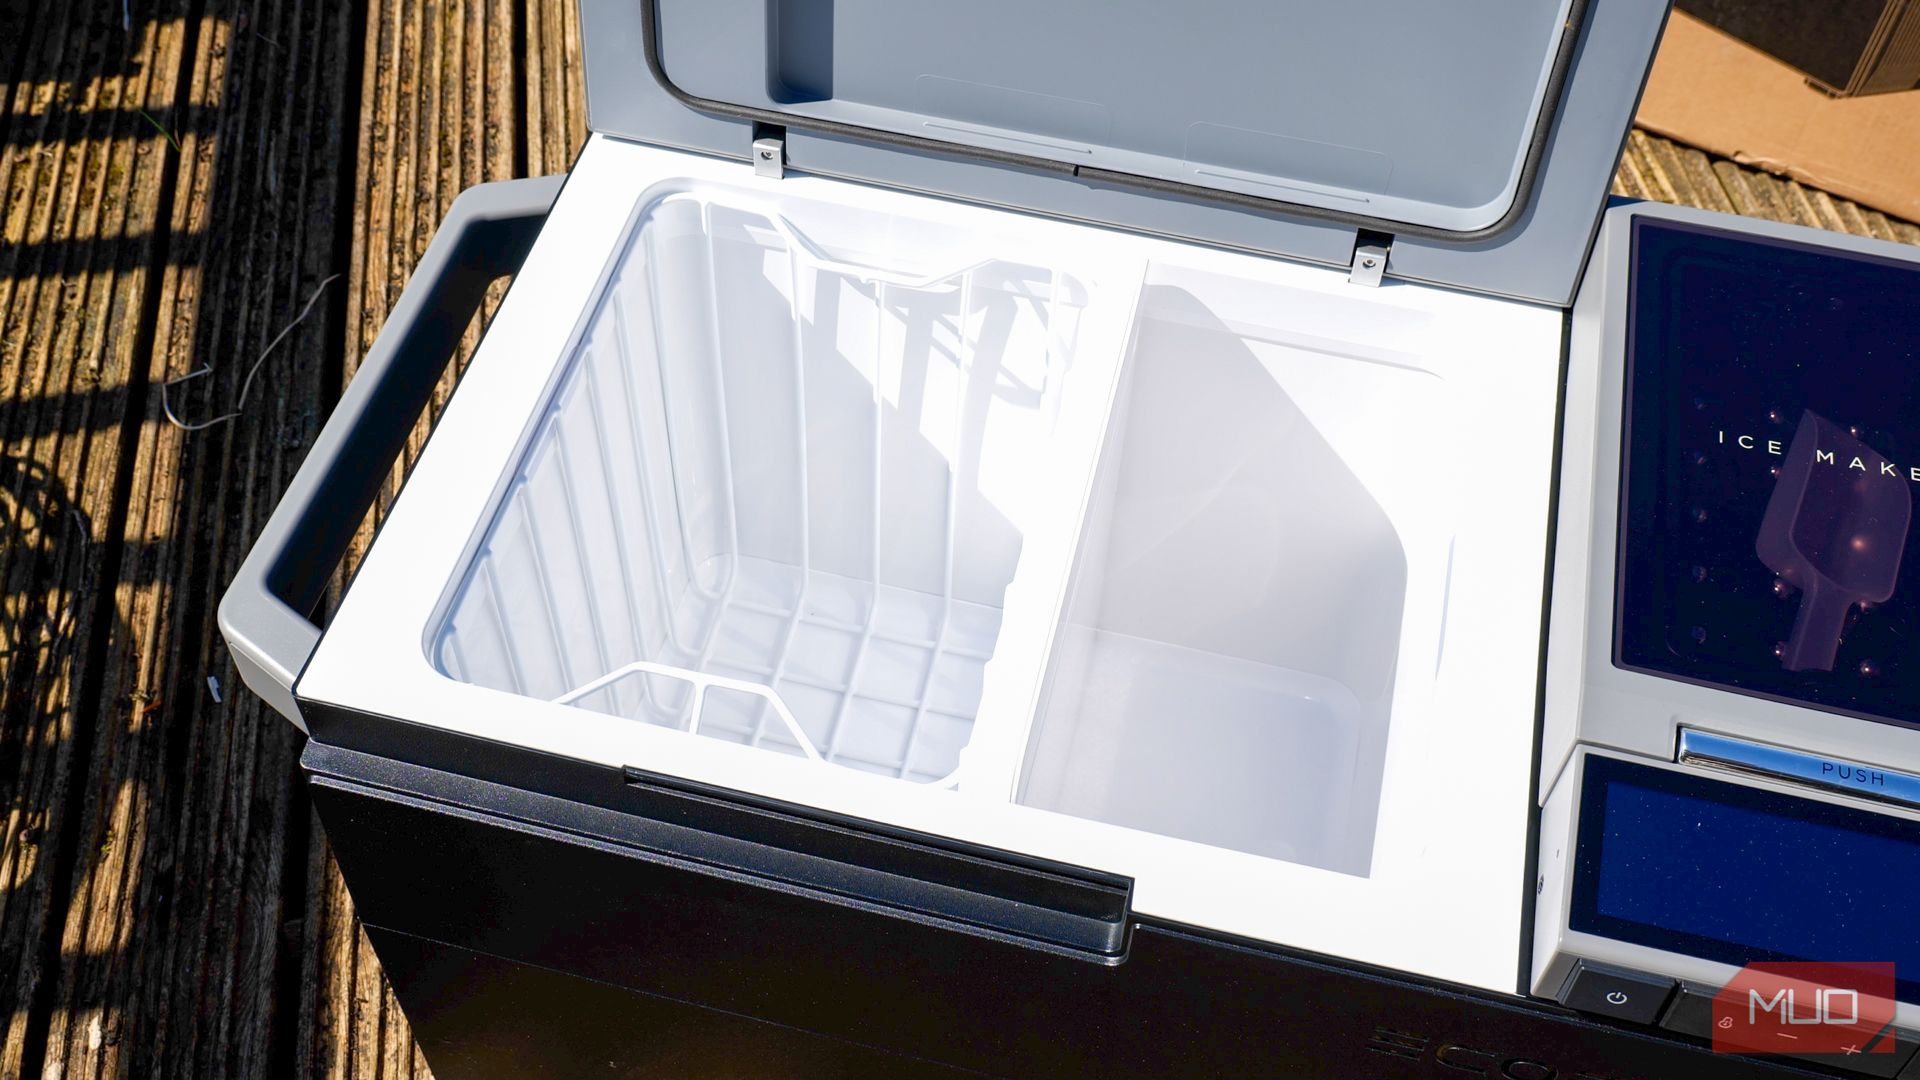 ecoflow glacier portable fridge freezer - inside view